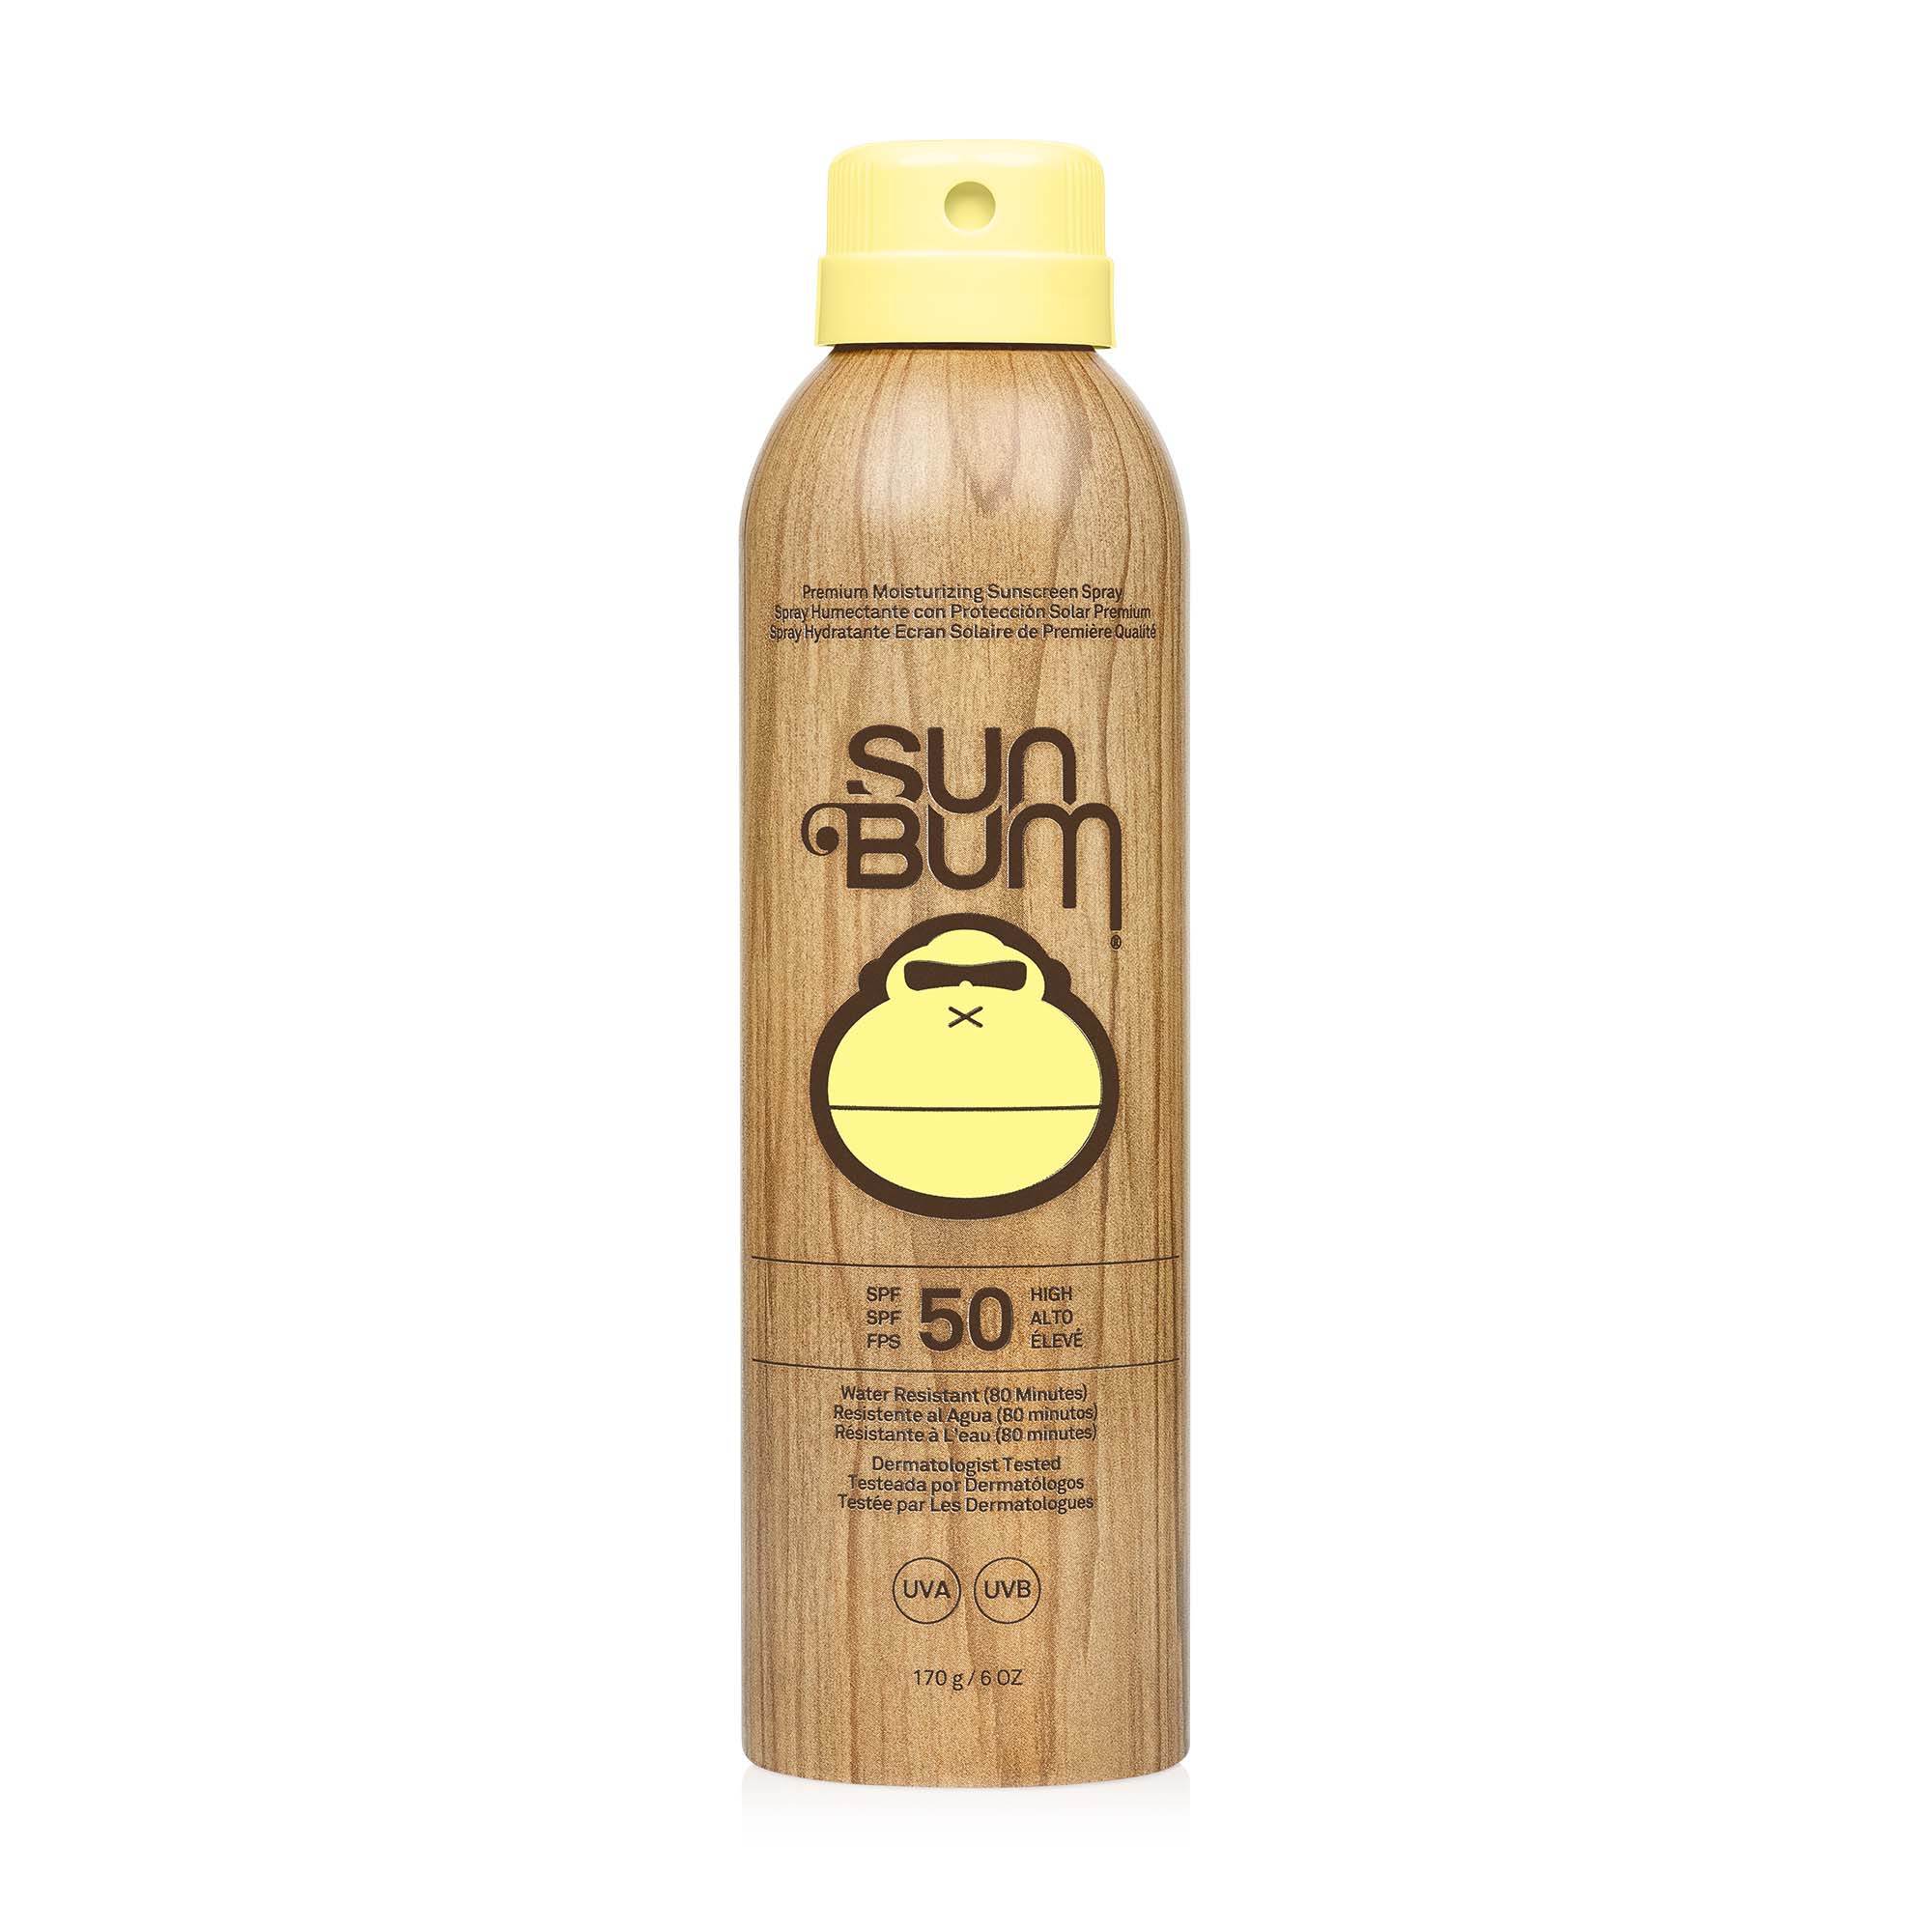 SUNBUM SUN BUM Original SPF 50 Sunscreen Spray